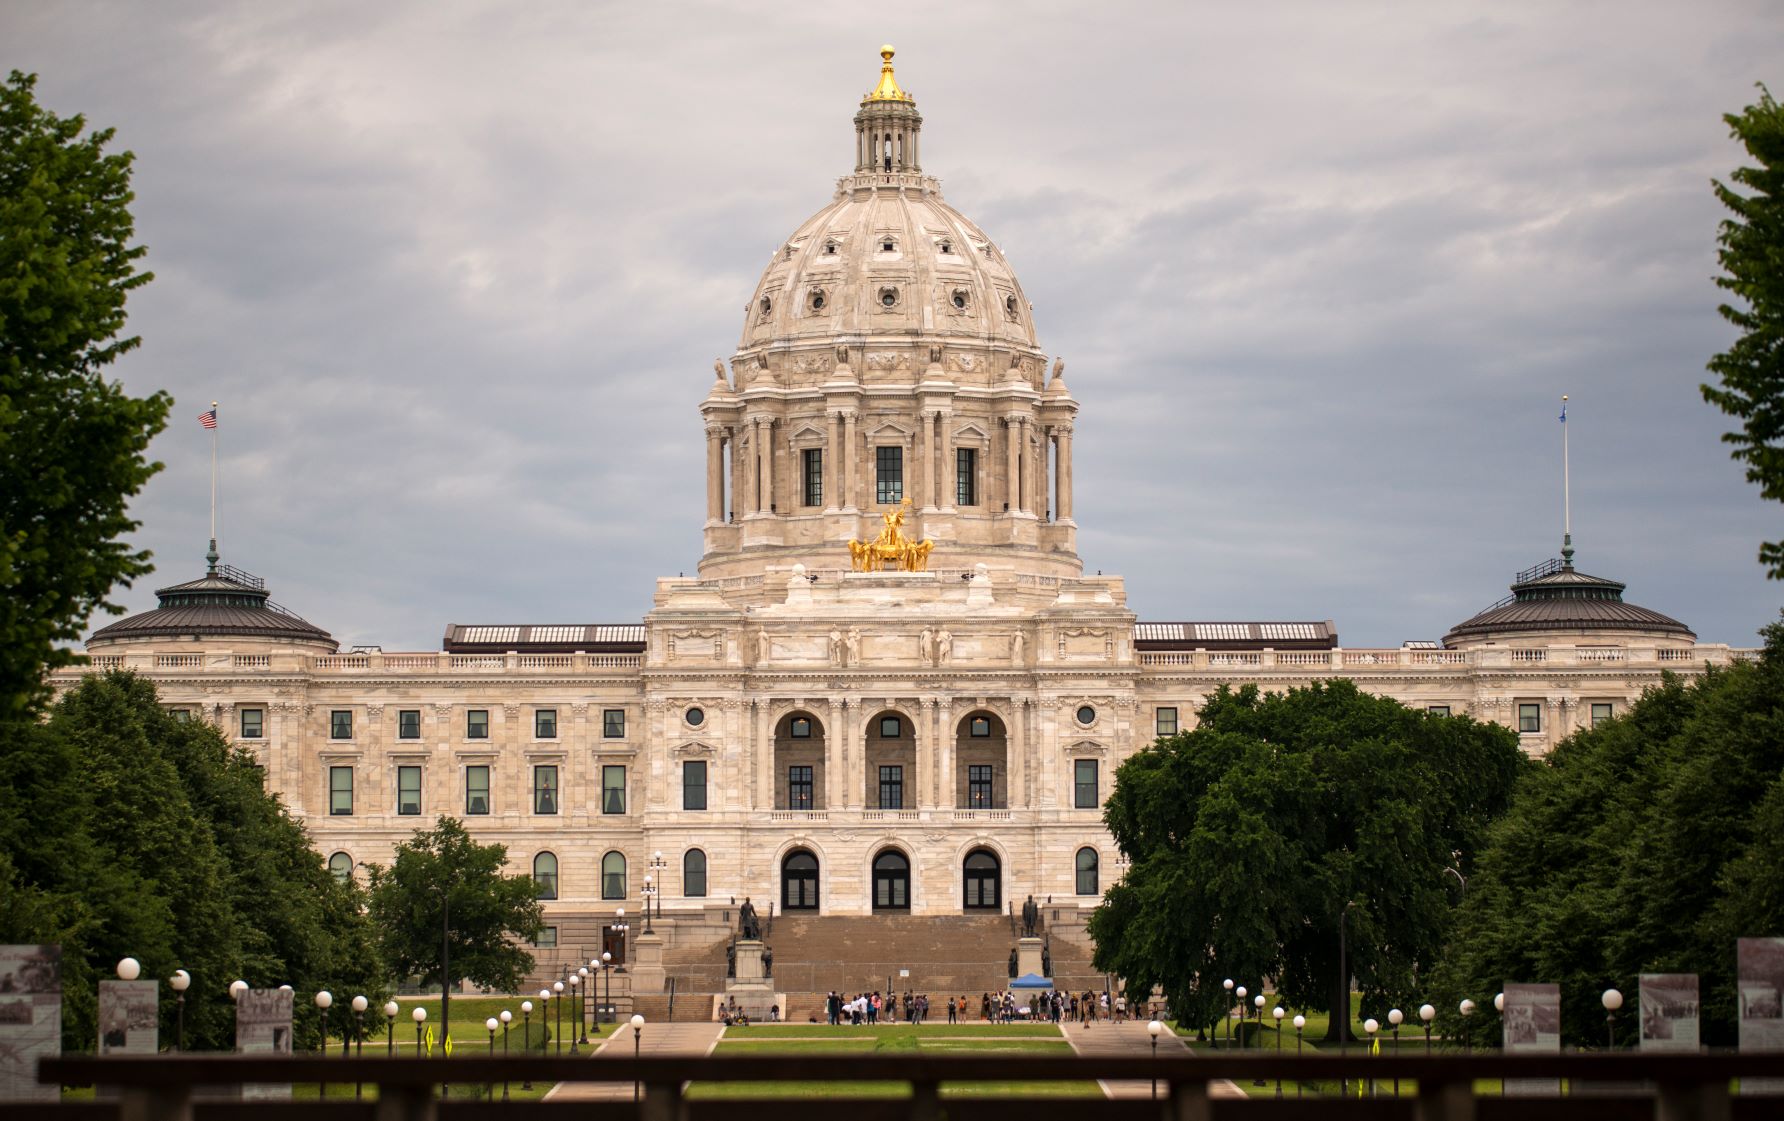 Minnesota Lawmakers Pass Modest Police Accountability Bill